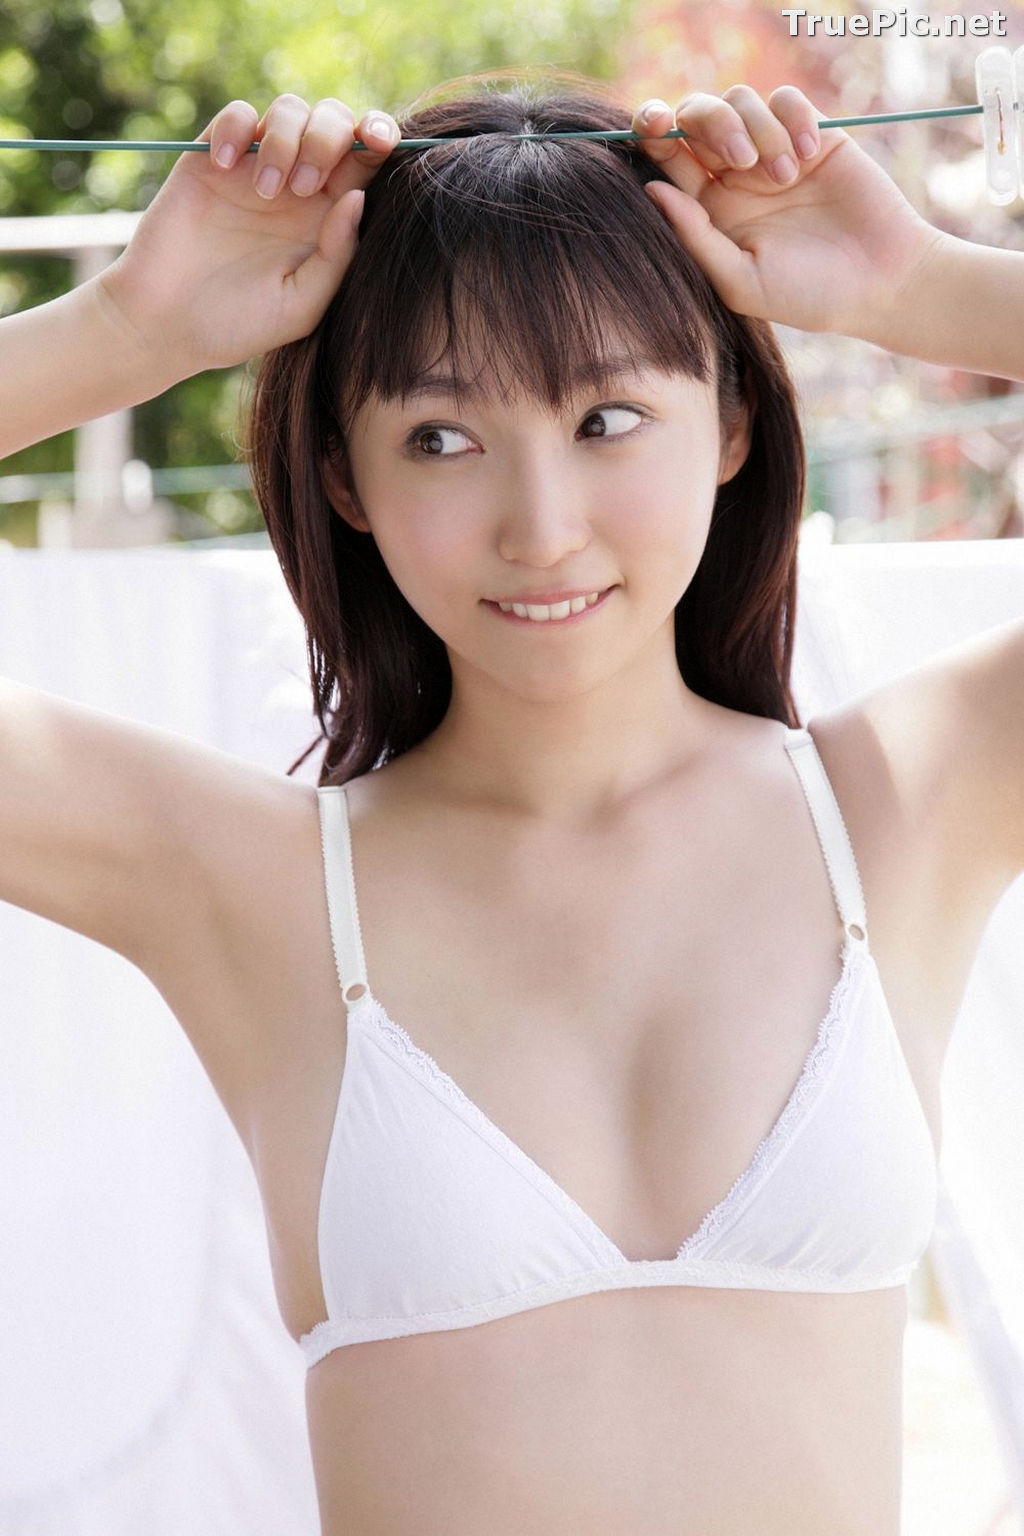 Image [YS Web] Vol.527 - Japanese Gravure Idol and Singer - Risa Yoshiki - TruePic.net - Picture-96